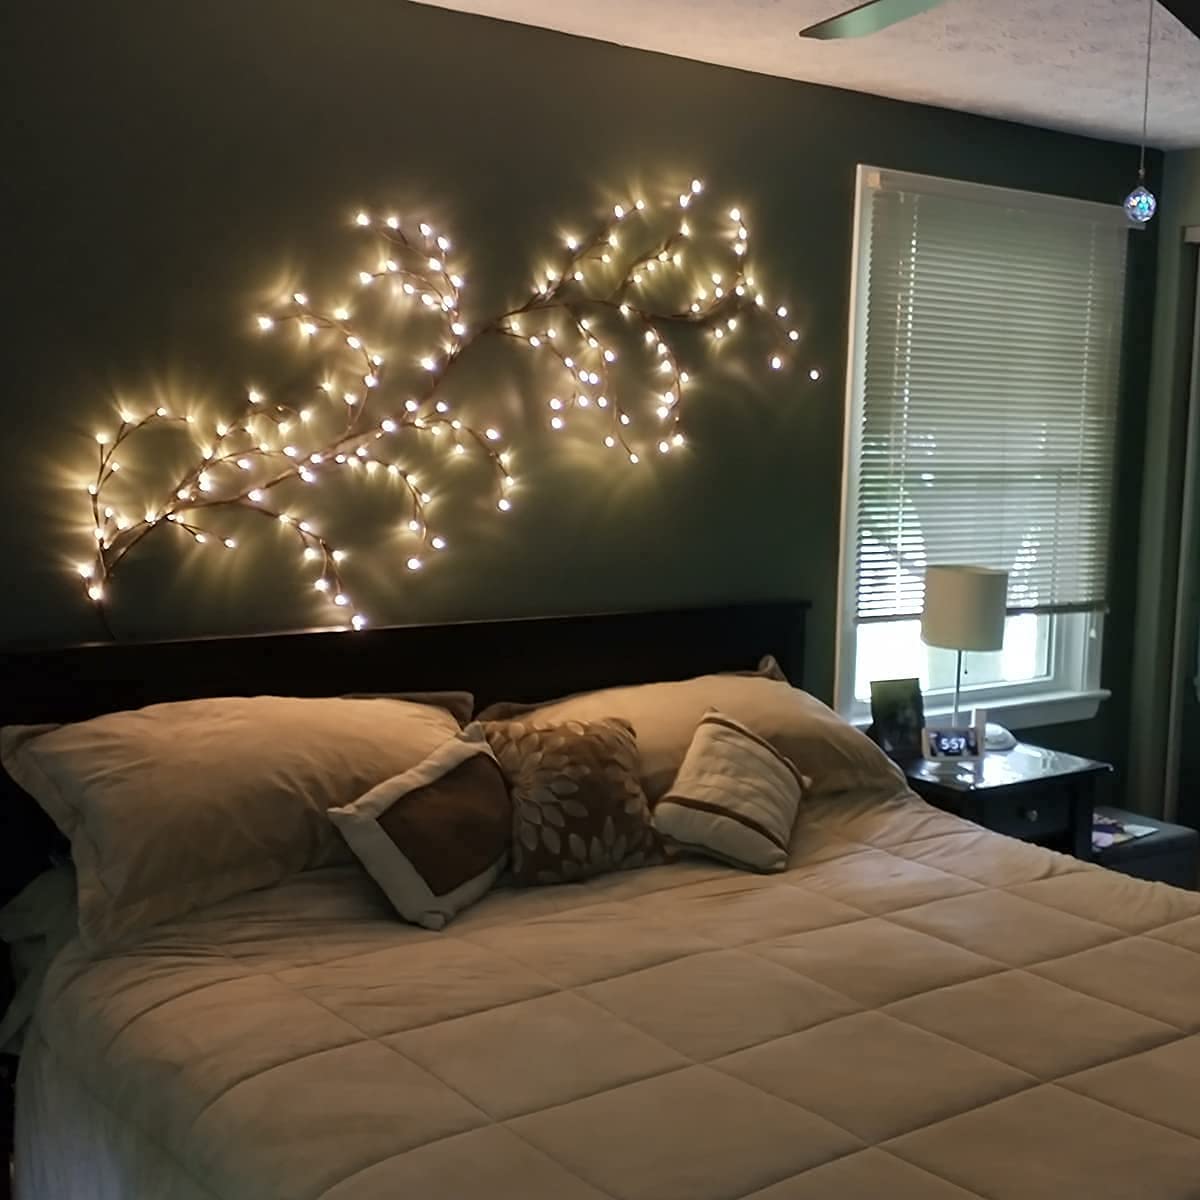 fairy lights vine bedroom decor  Room makeover bedroom, Bedroom